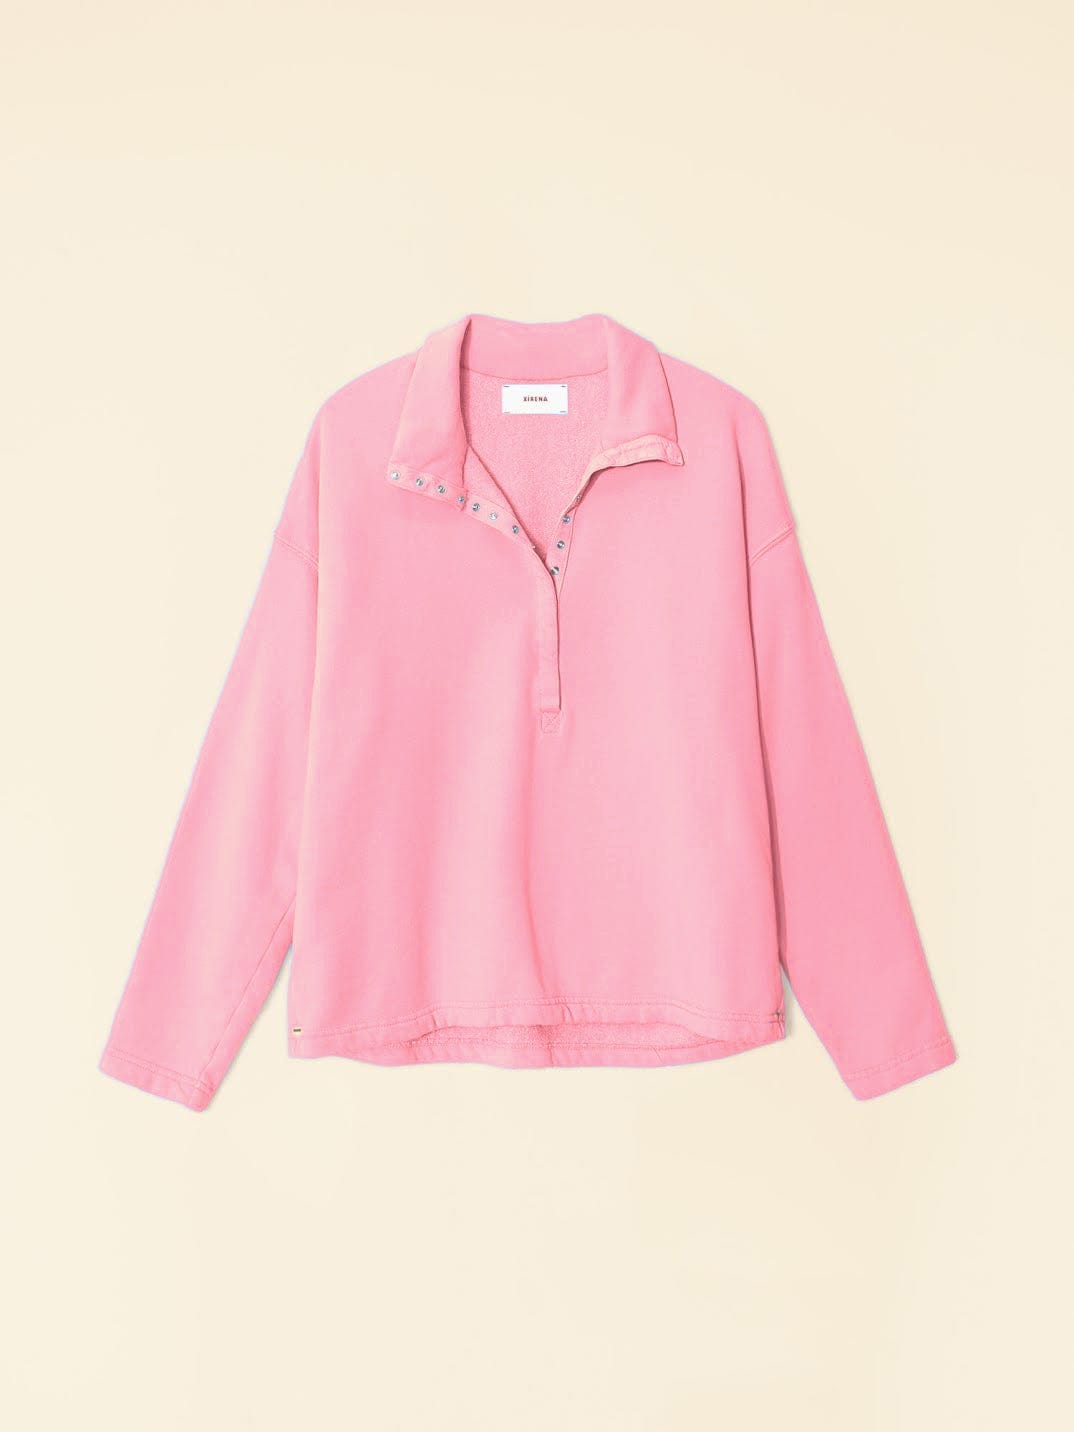 Xirena Sweatshirt Pink Torch McCoy Sweatshirt